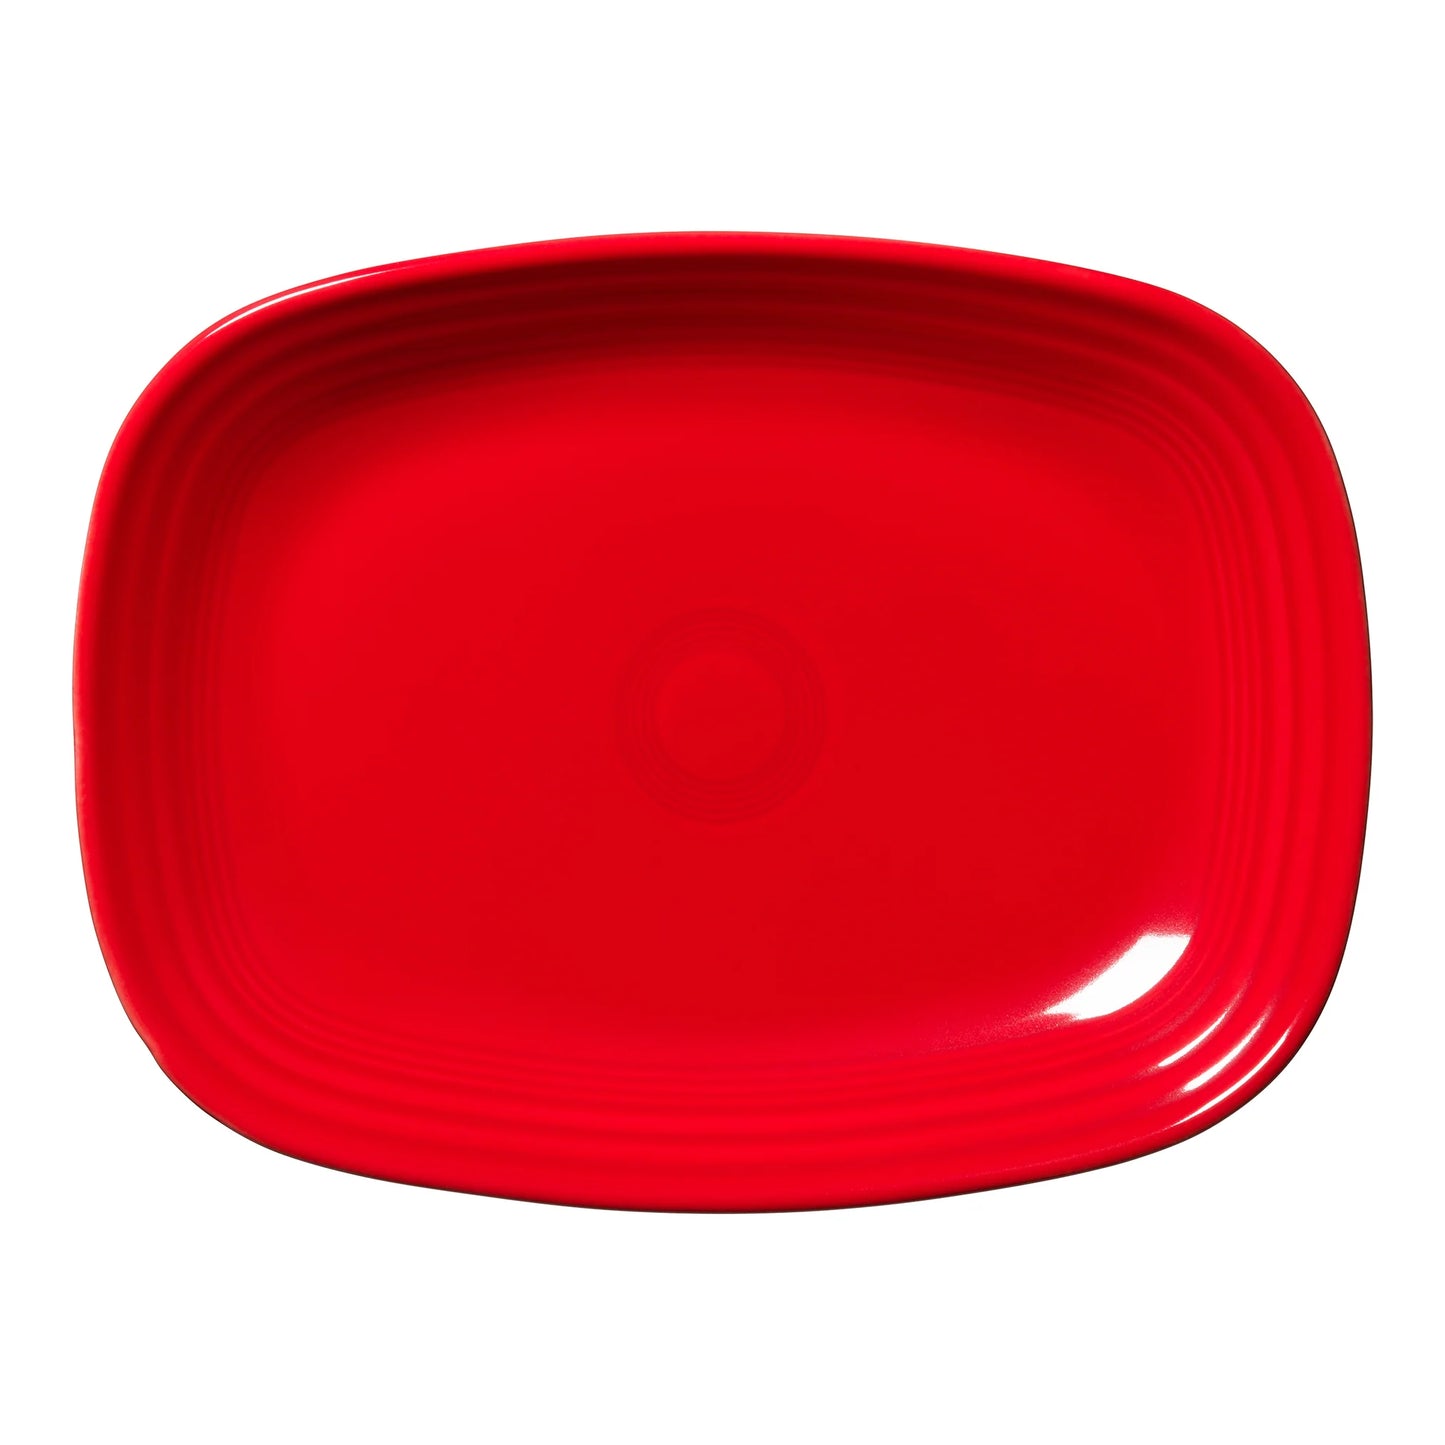 Rectangular Platter